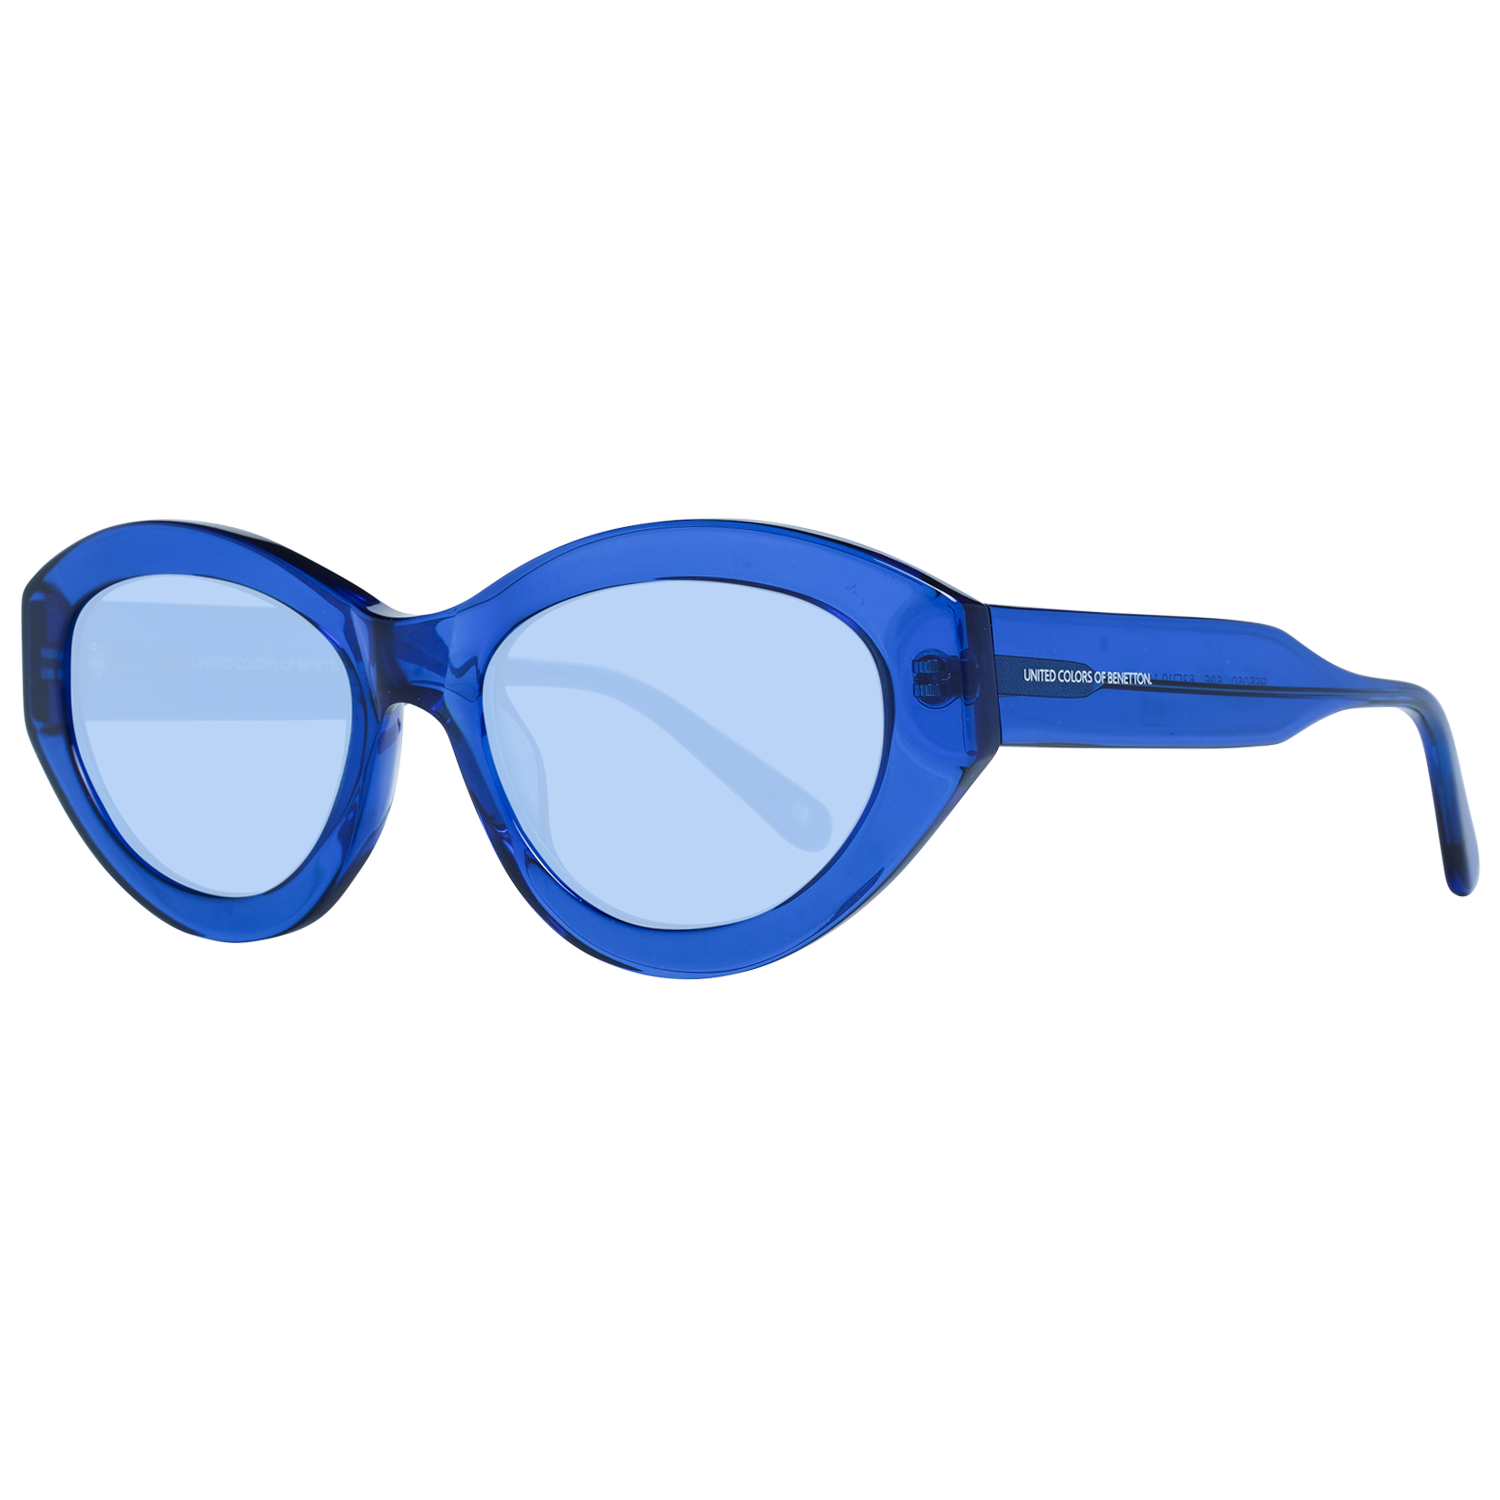 Benetton Sunglasses Benetton Sunglasses BE5050 696 53 Eyeglasses Eyewear UK USA Australia 